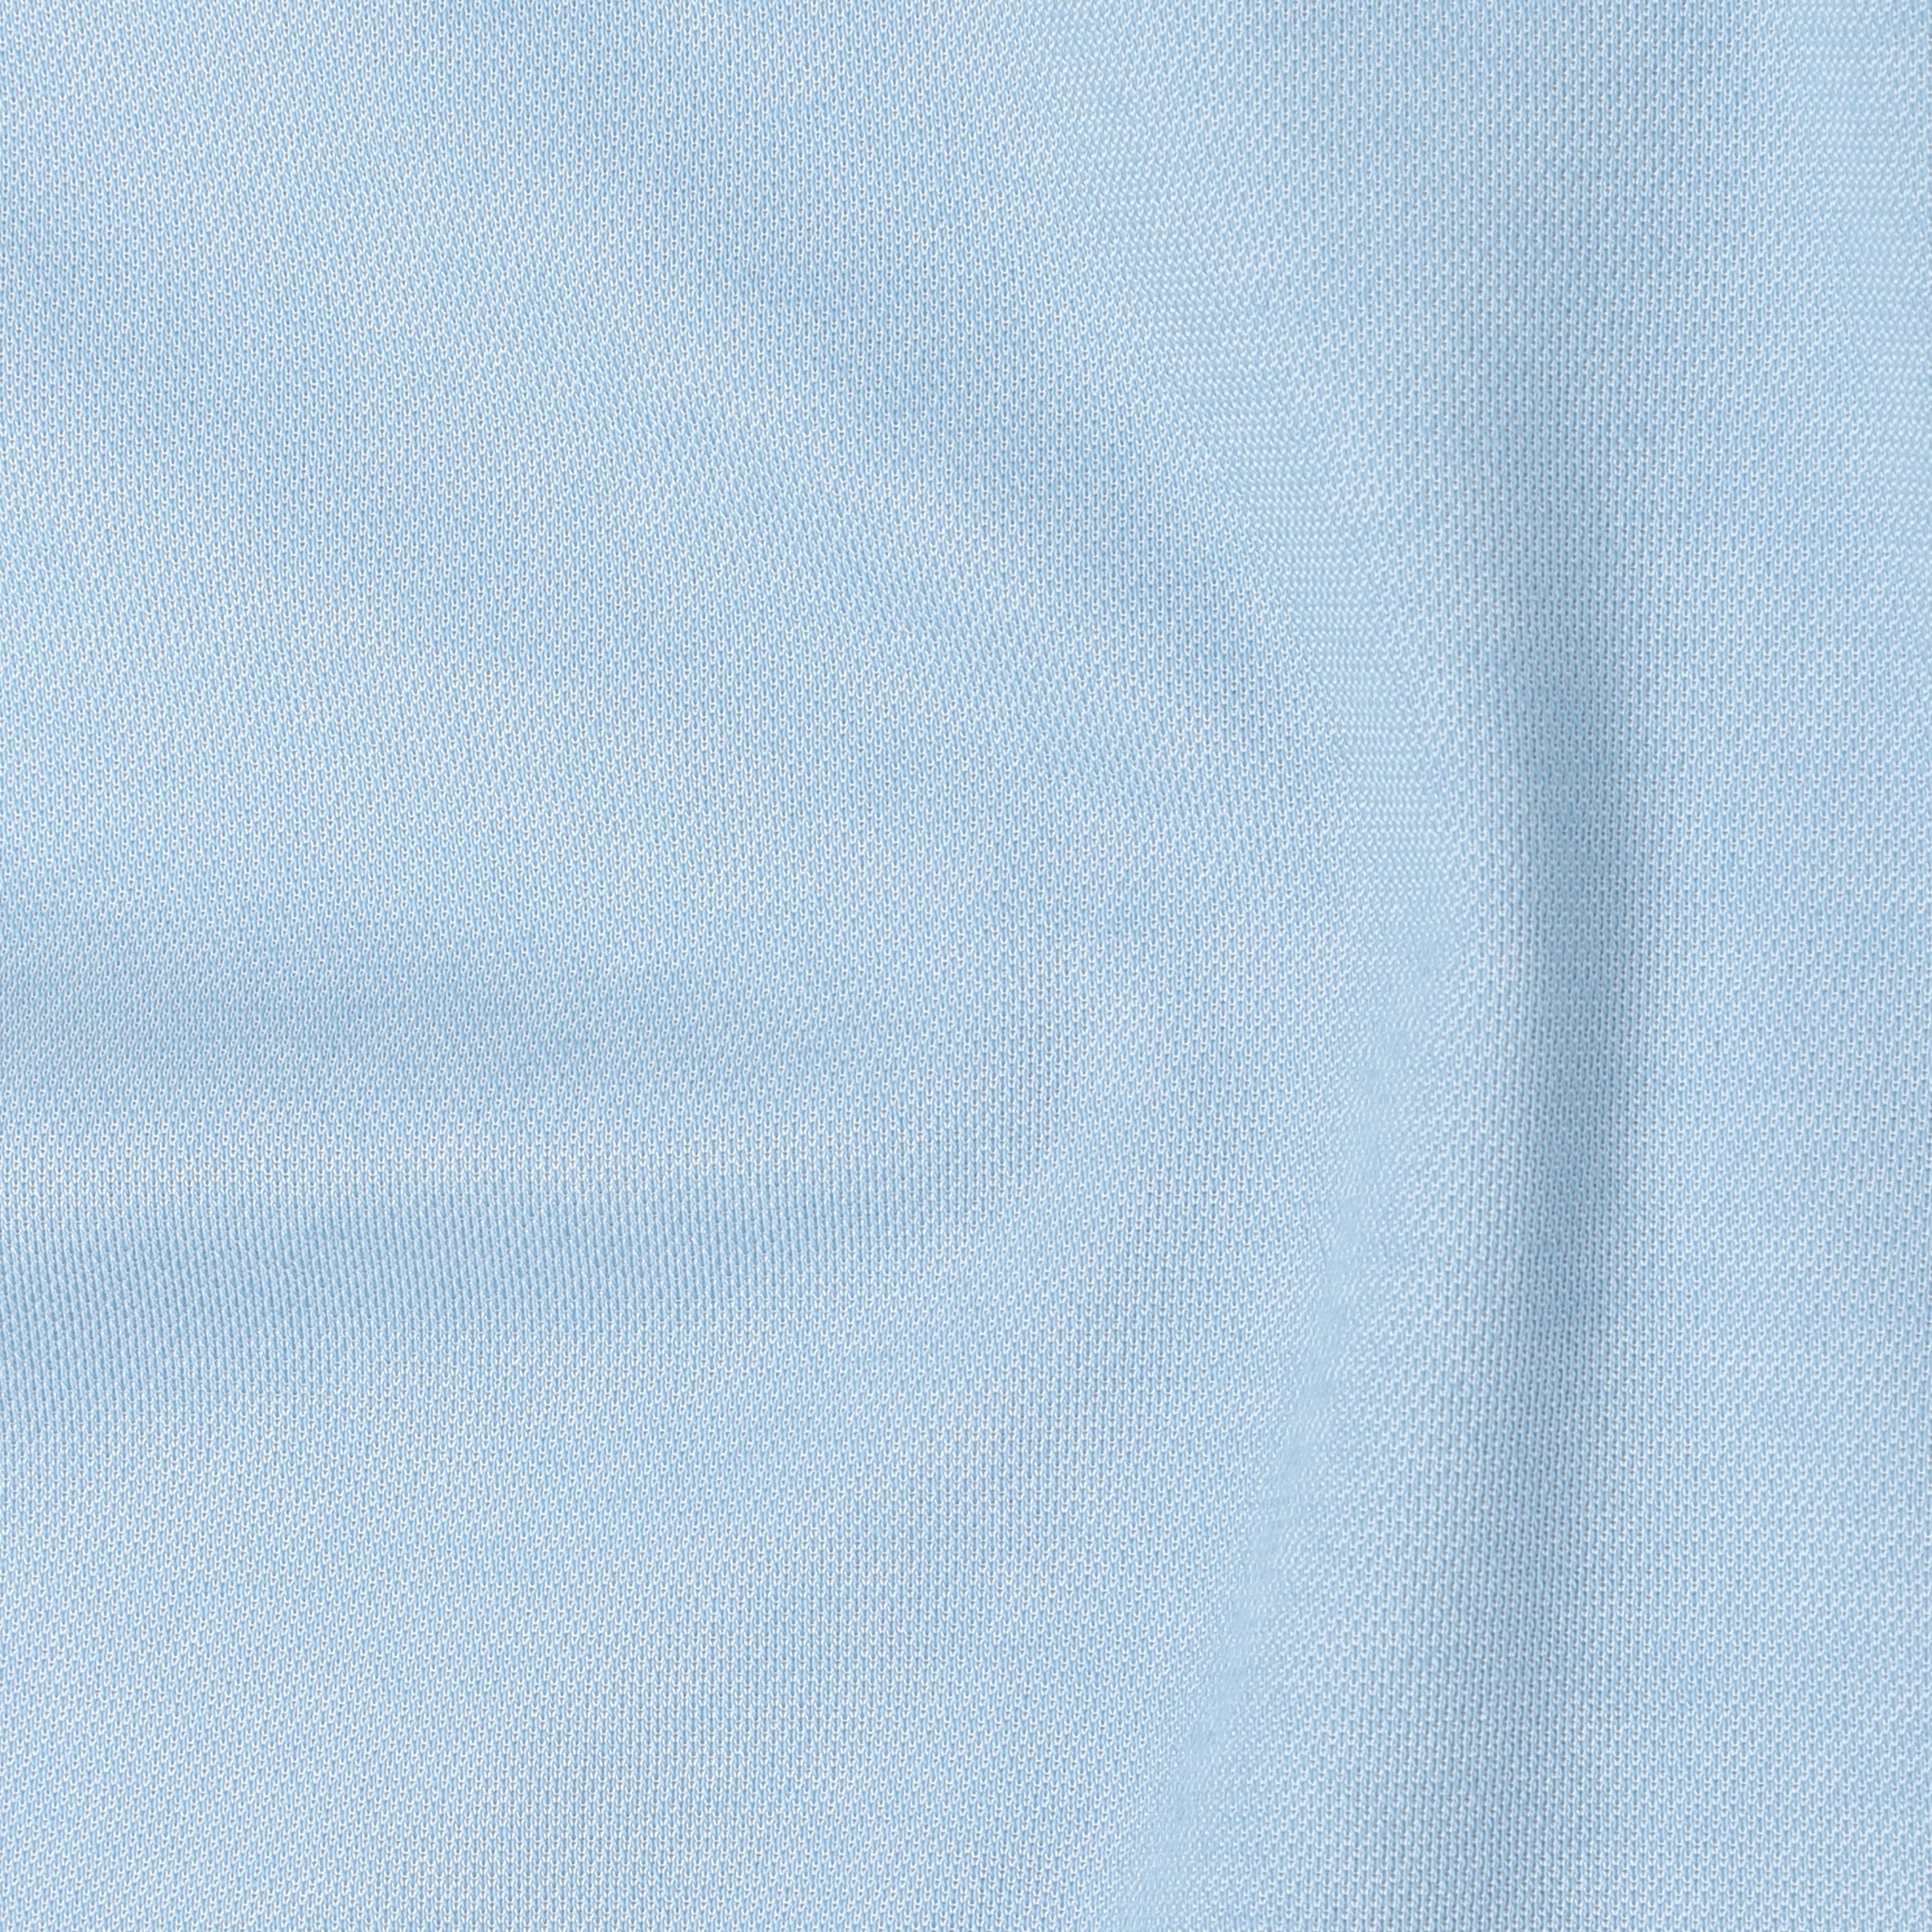 Range Polo Sky Blue close up of fabric